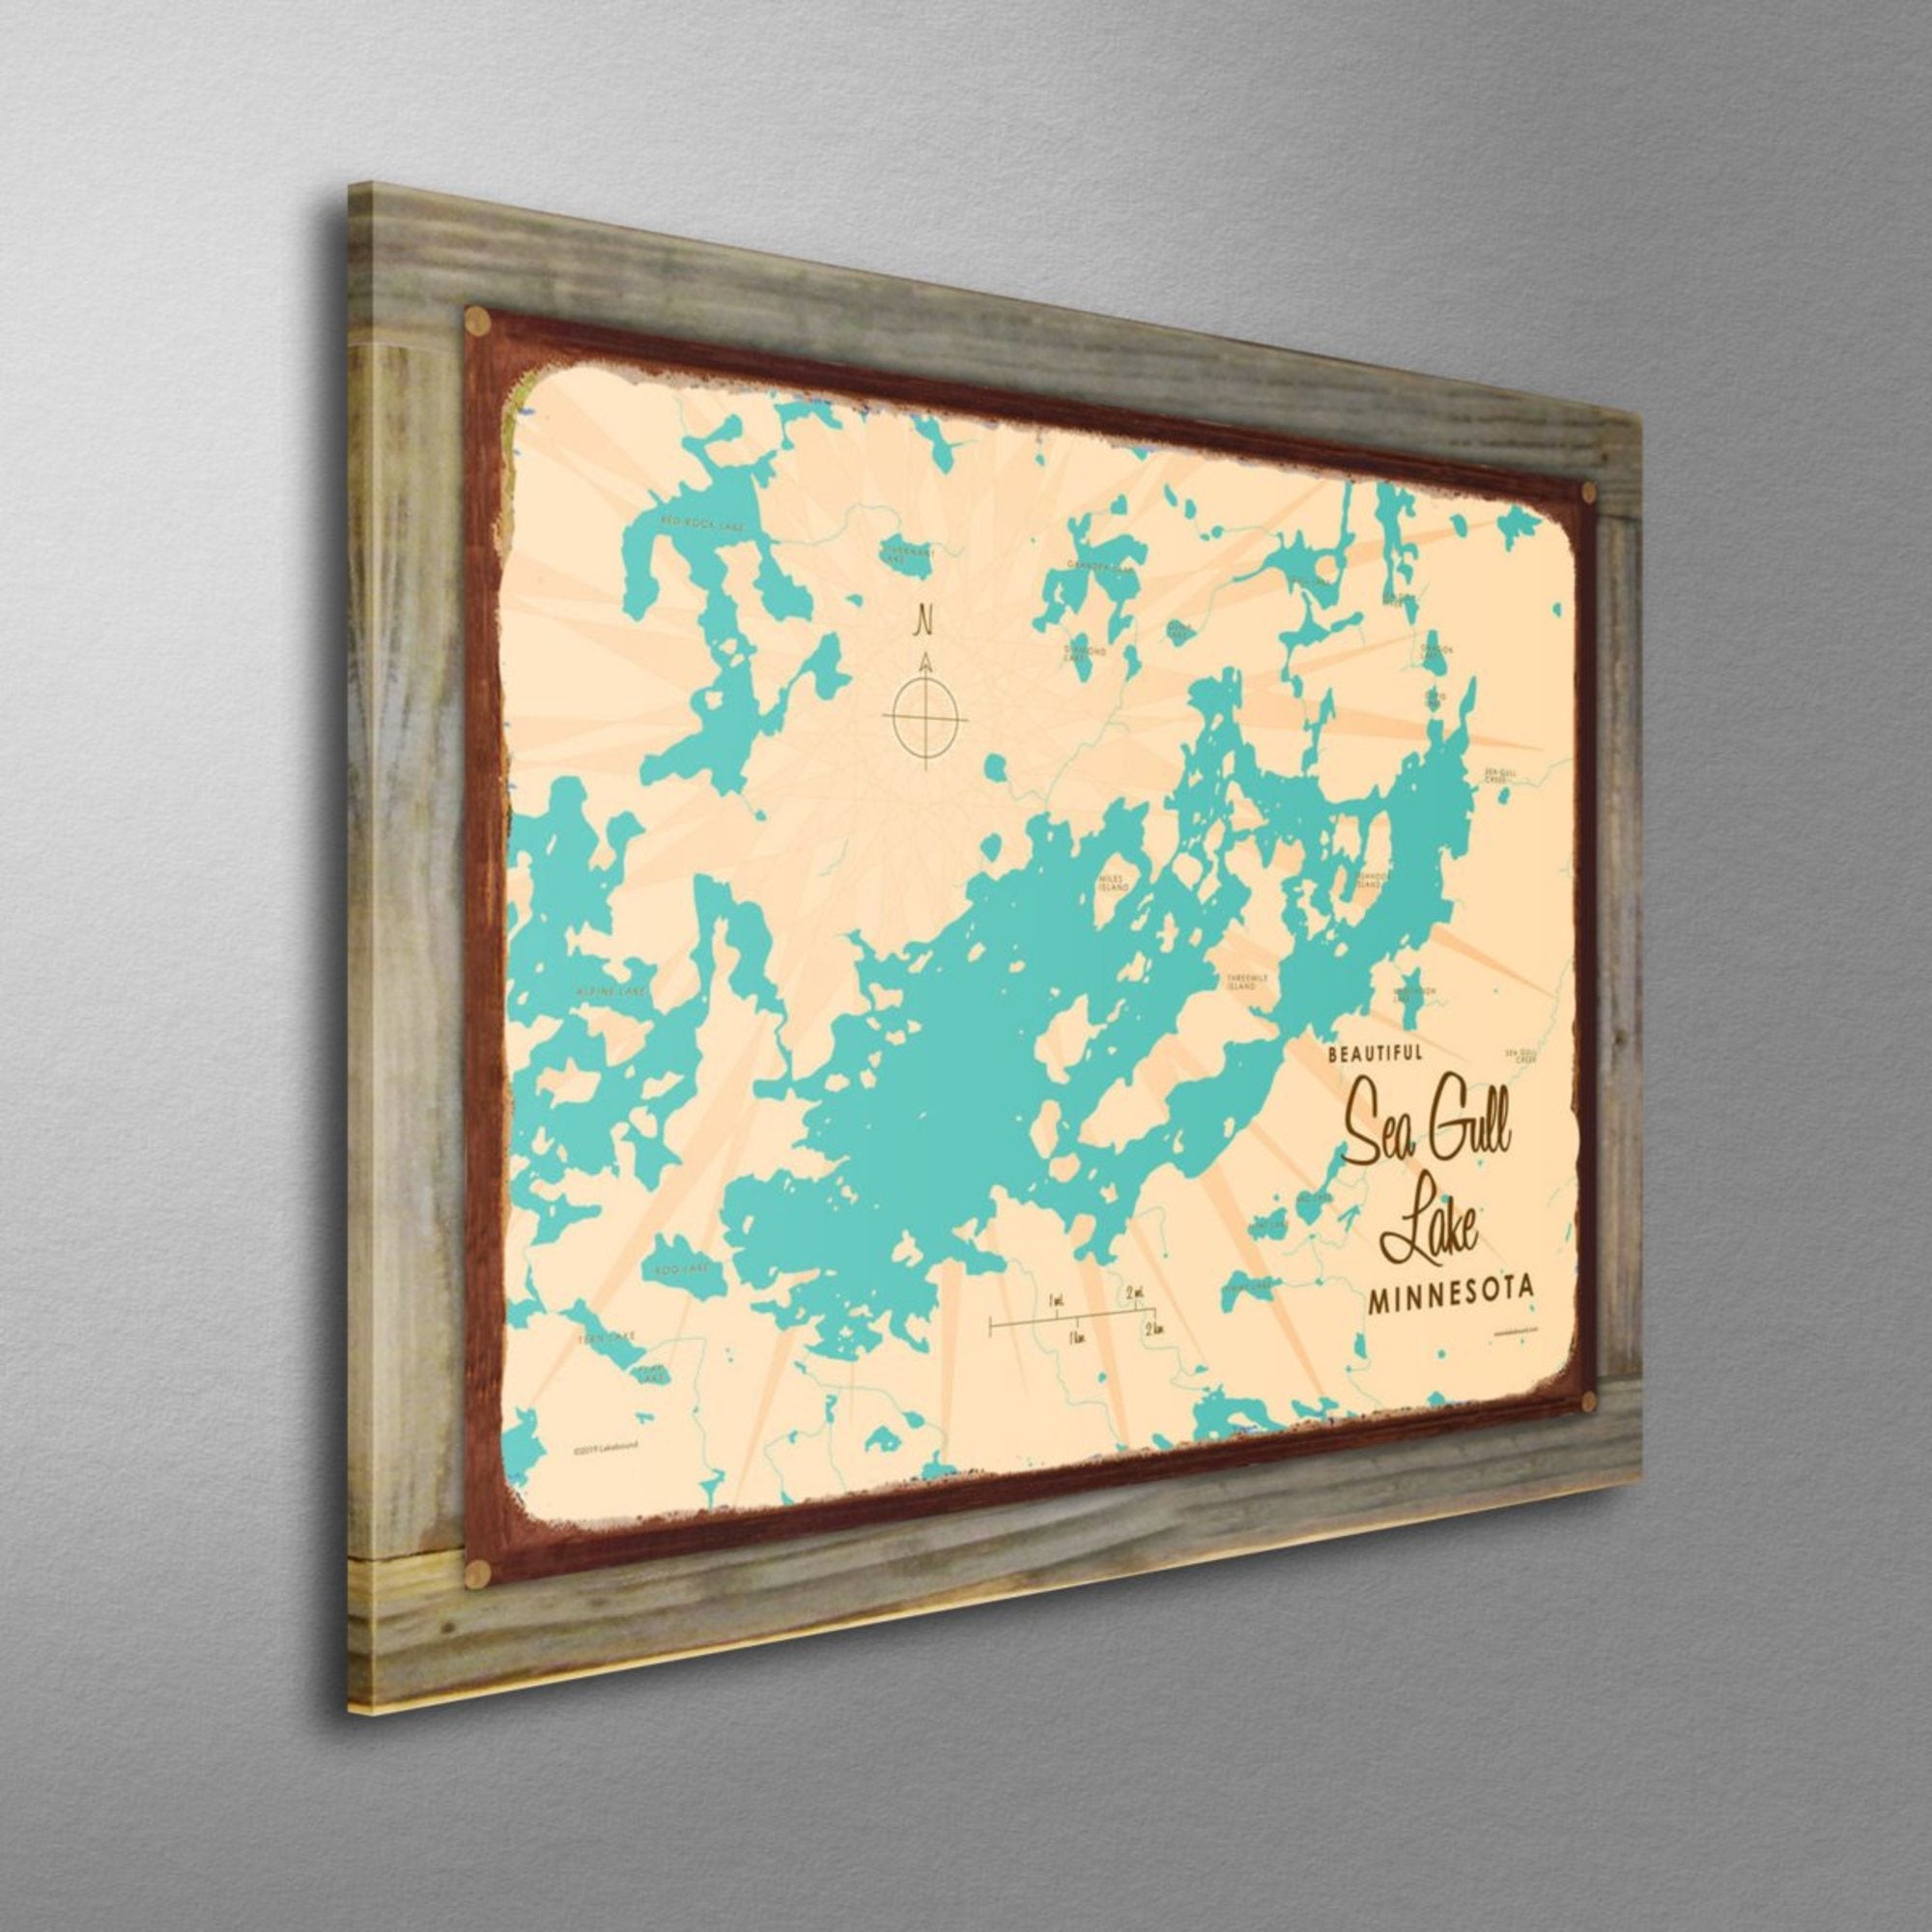 Sea Gull Lake Minnesota, Wood-Mounted Rustic Metal Sign Map Art